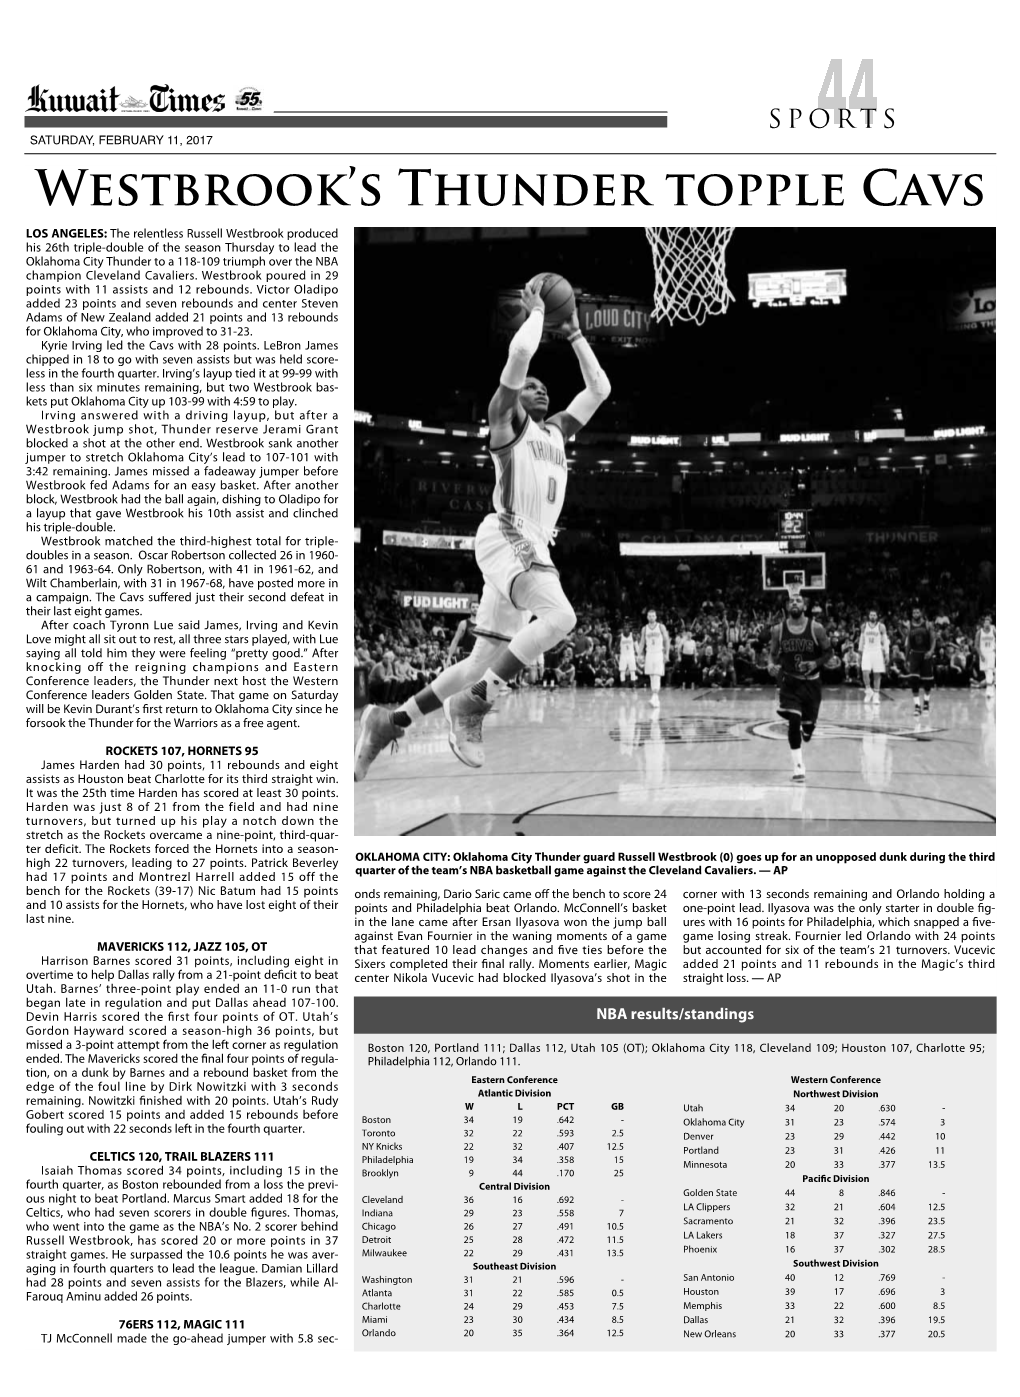 Westbrook's Thunder Topple Cavs